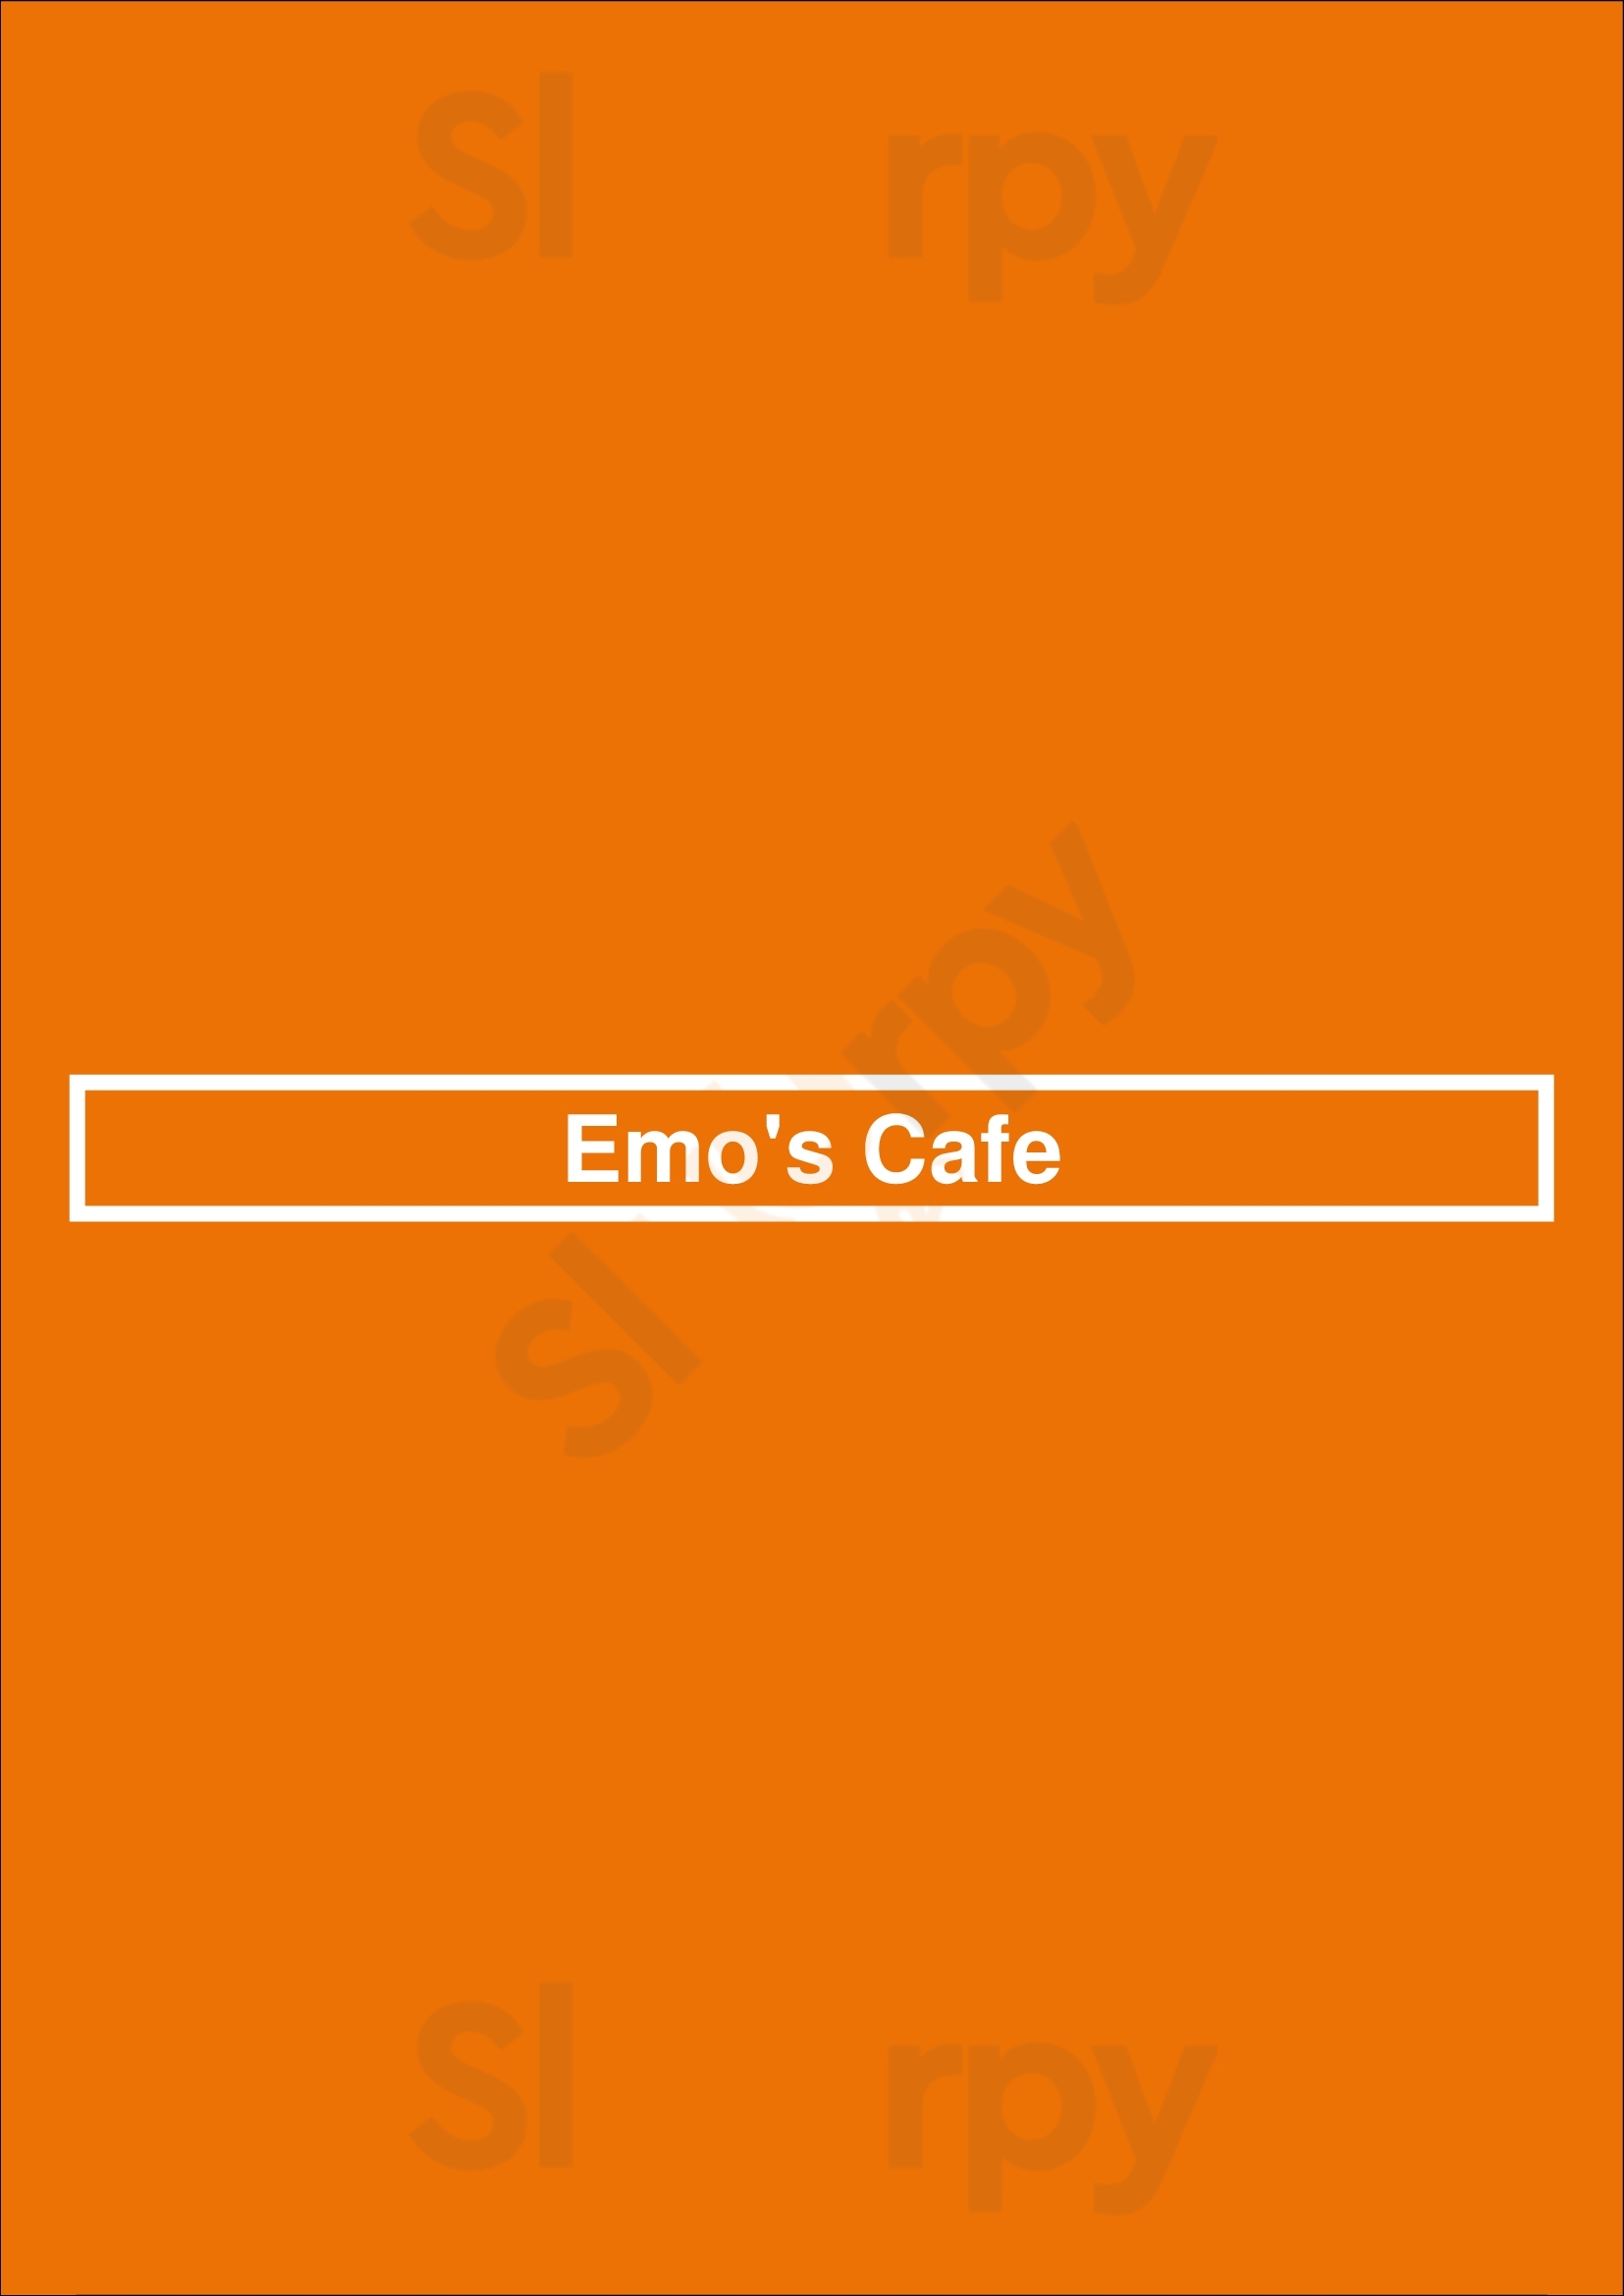 Emo's Cafe San Francisco Menu - 1